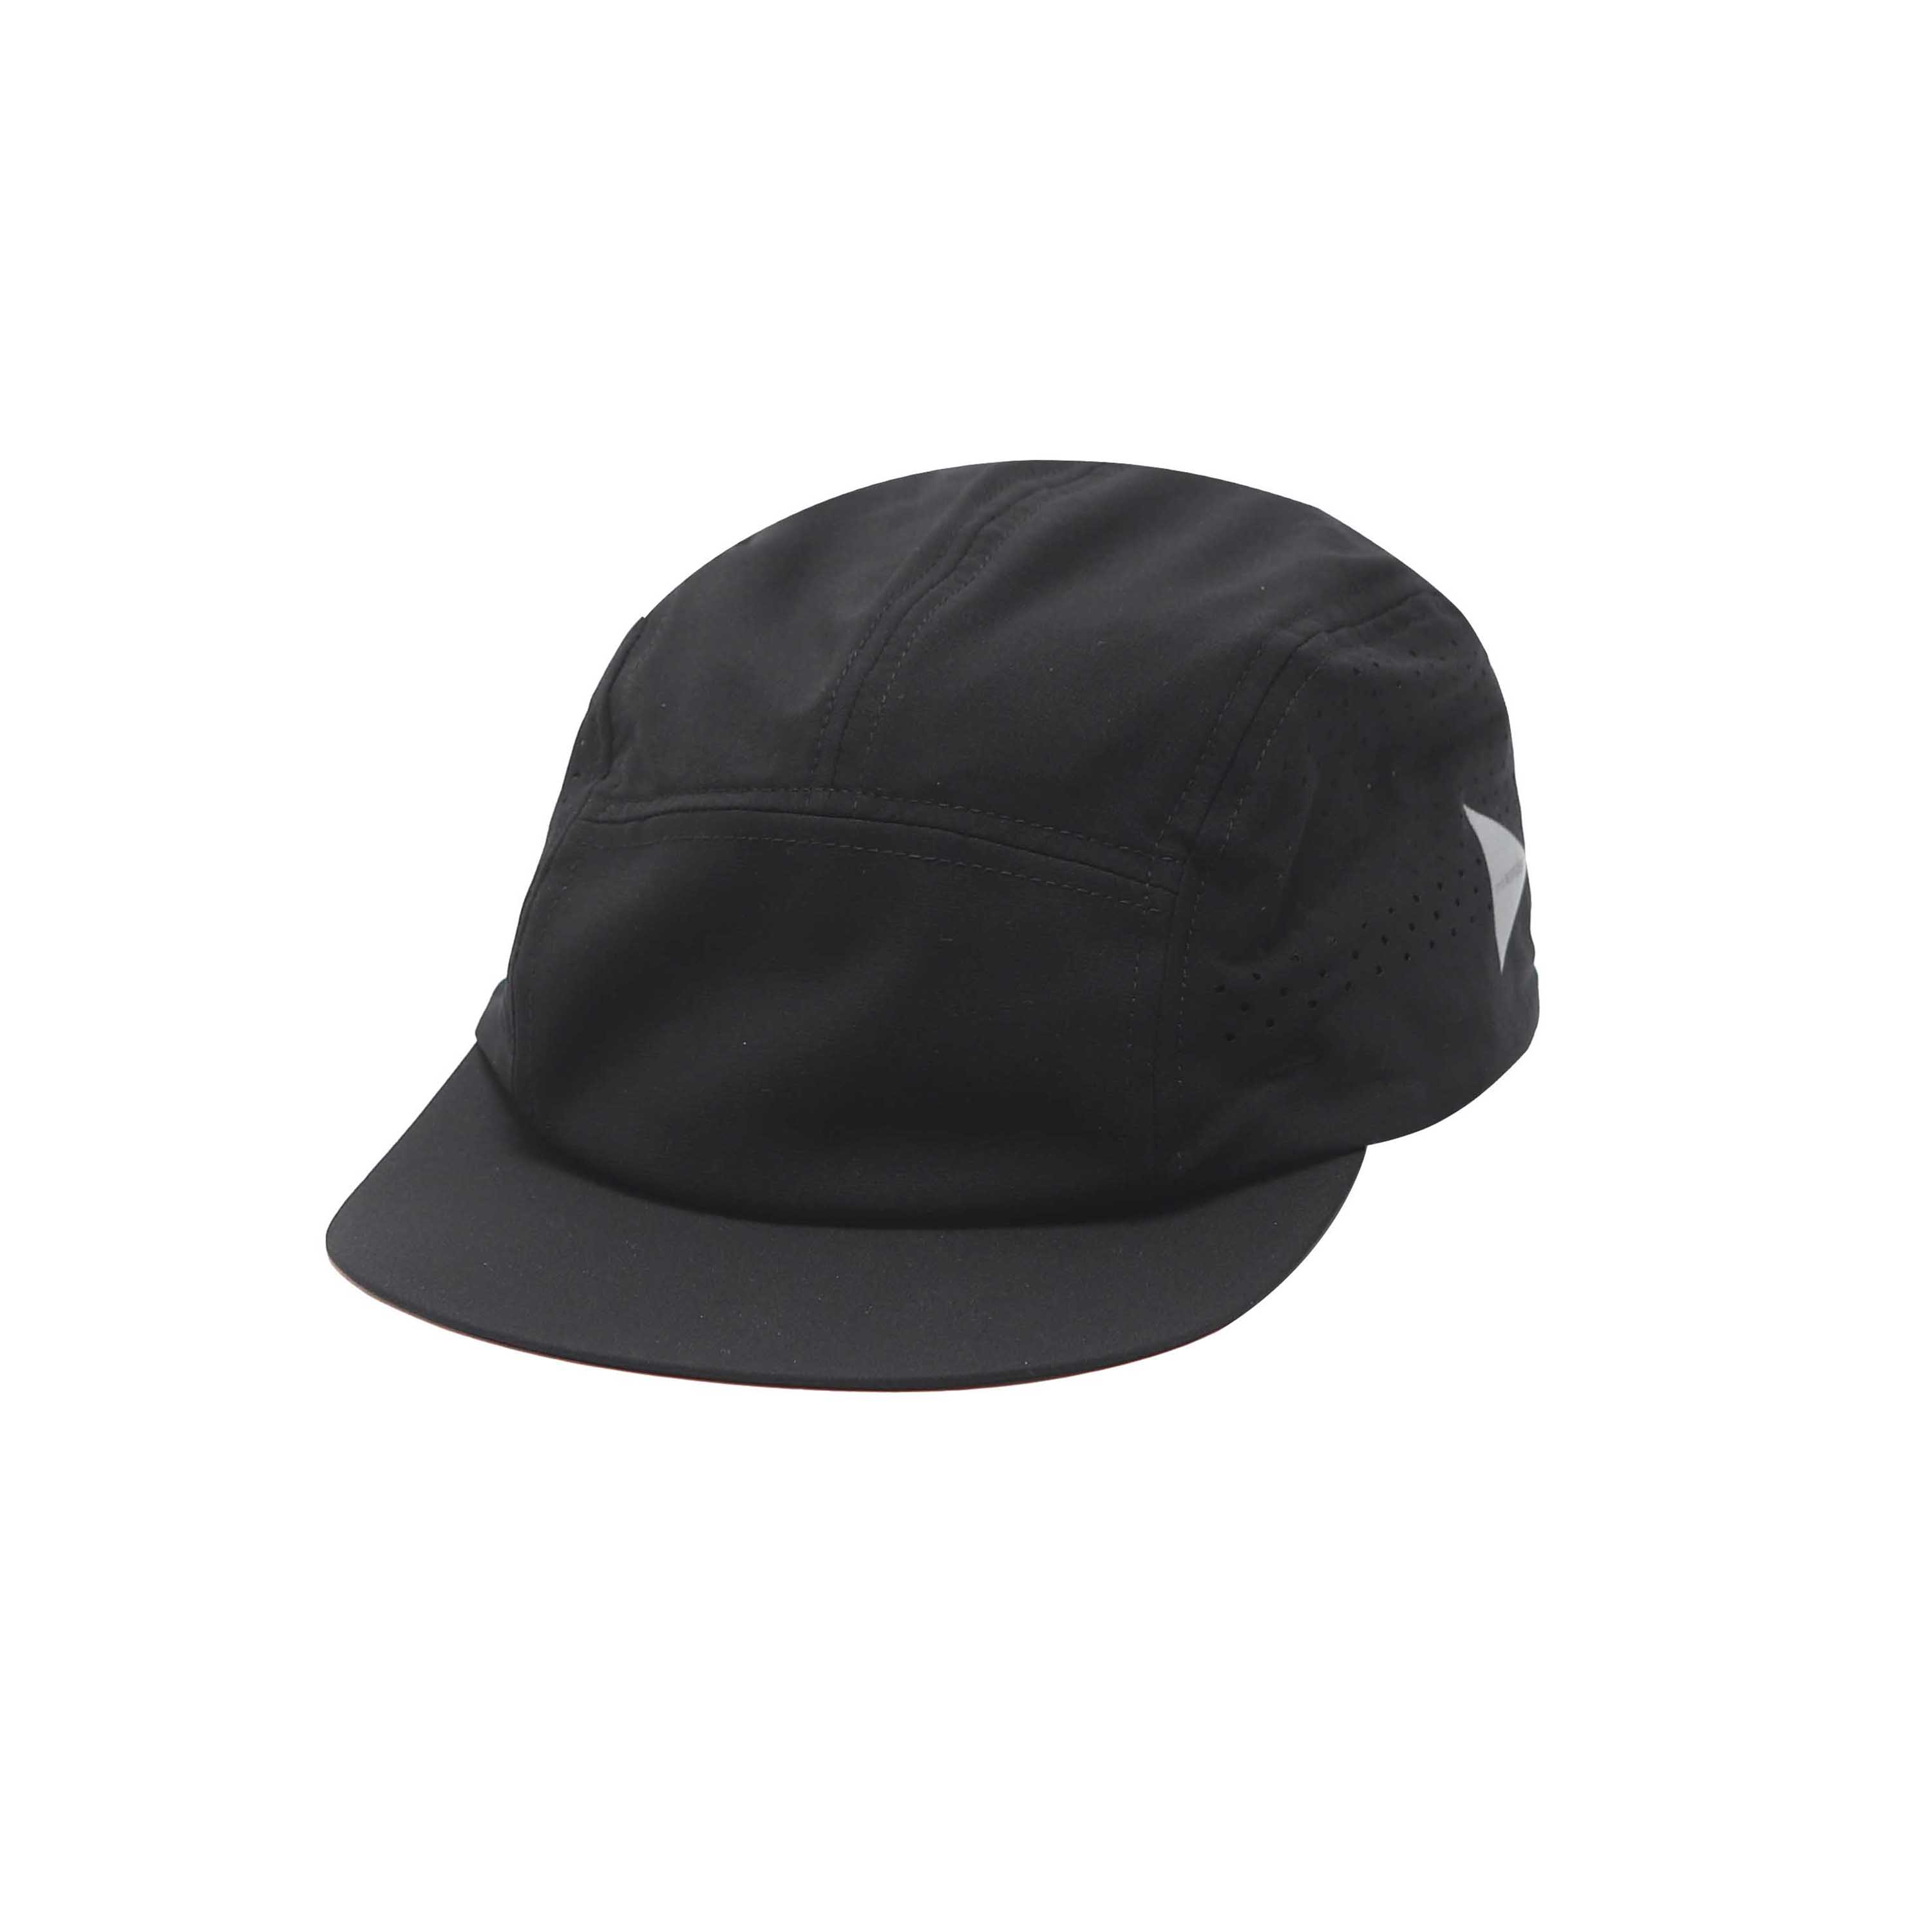 TECH CAP - BLACK